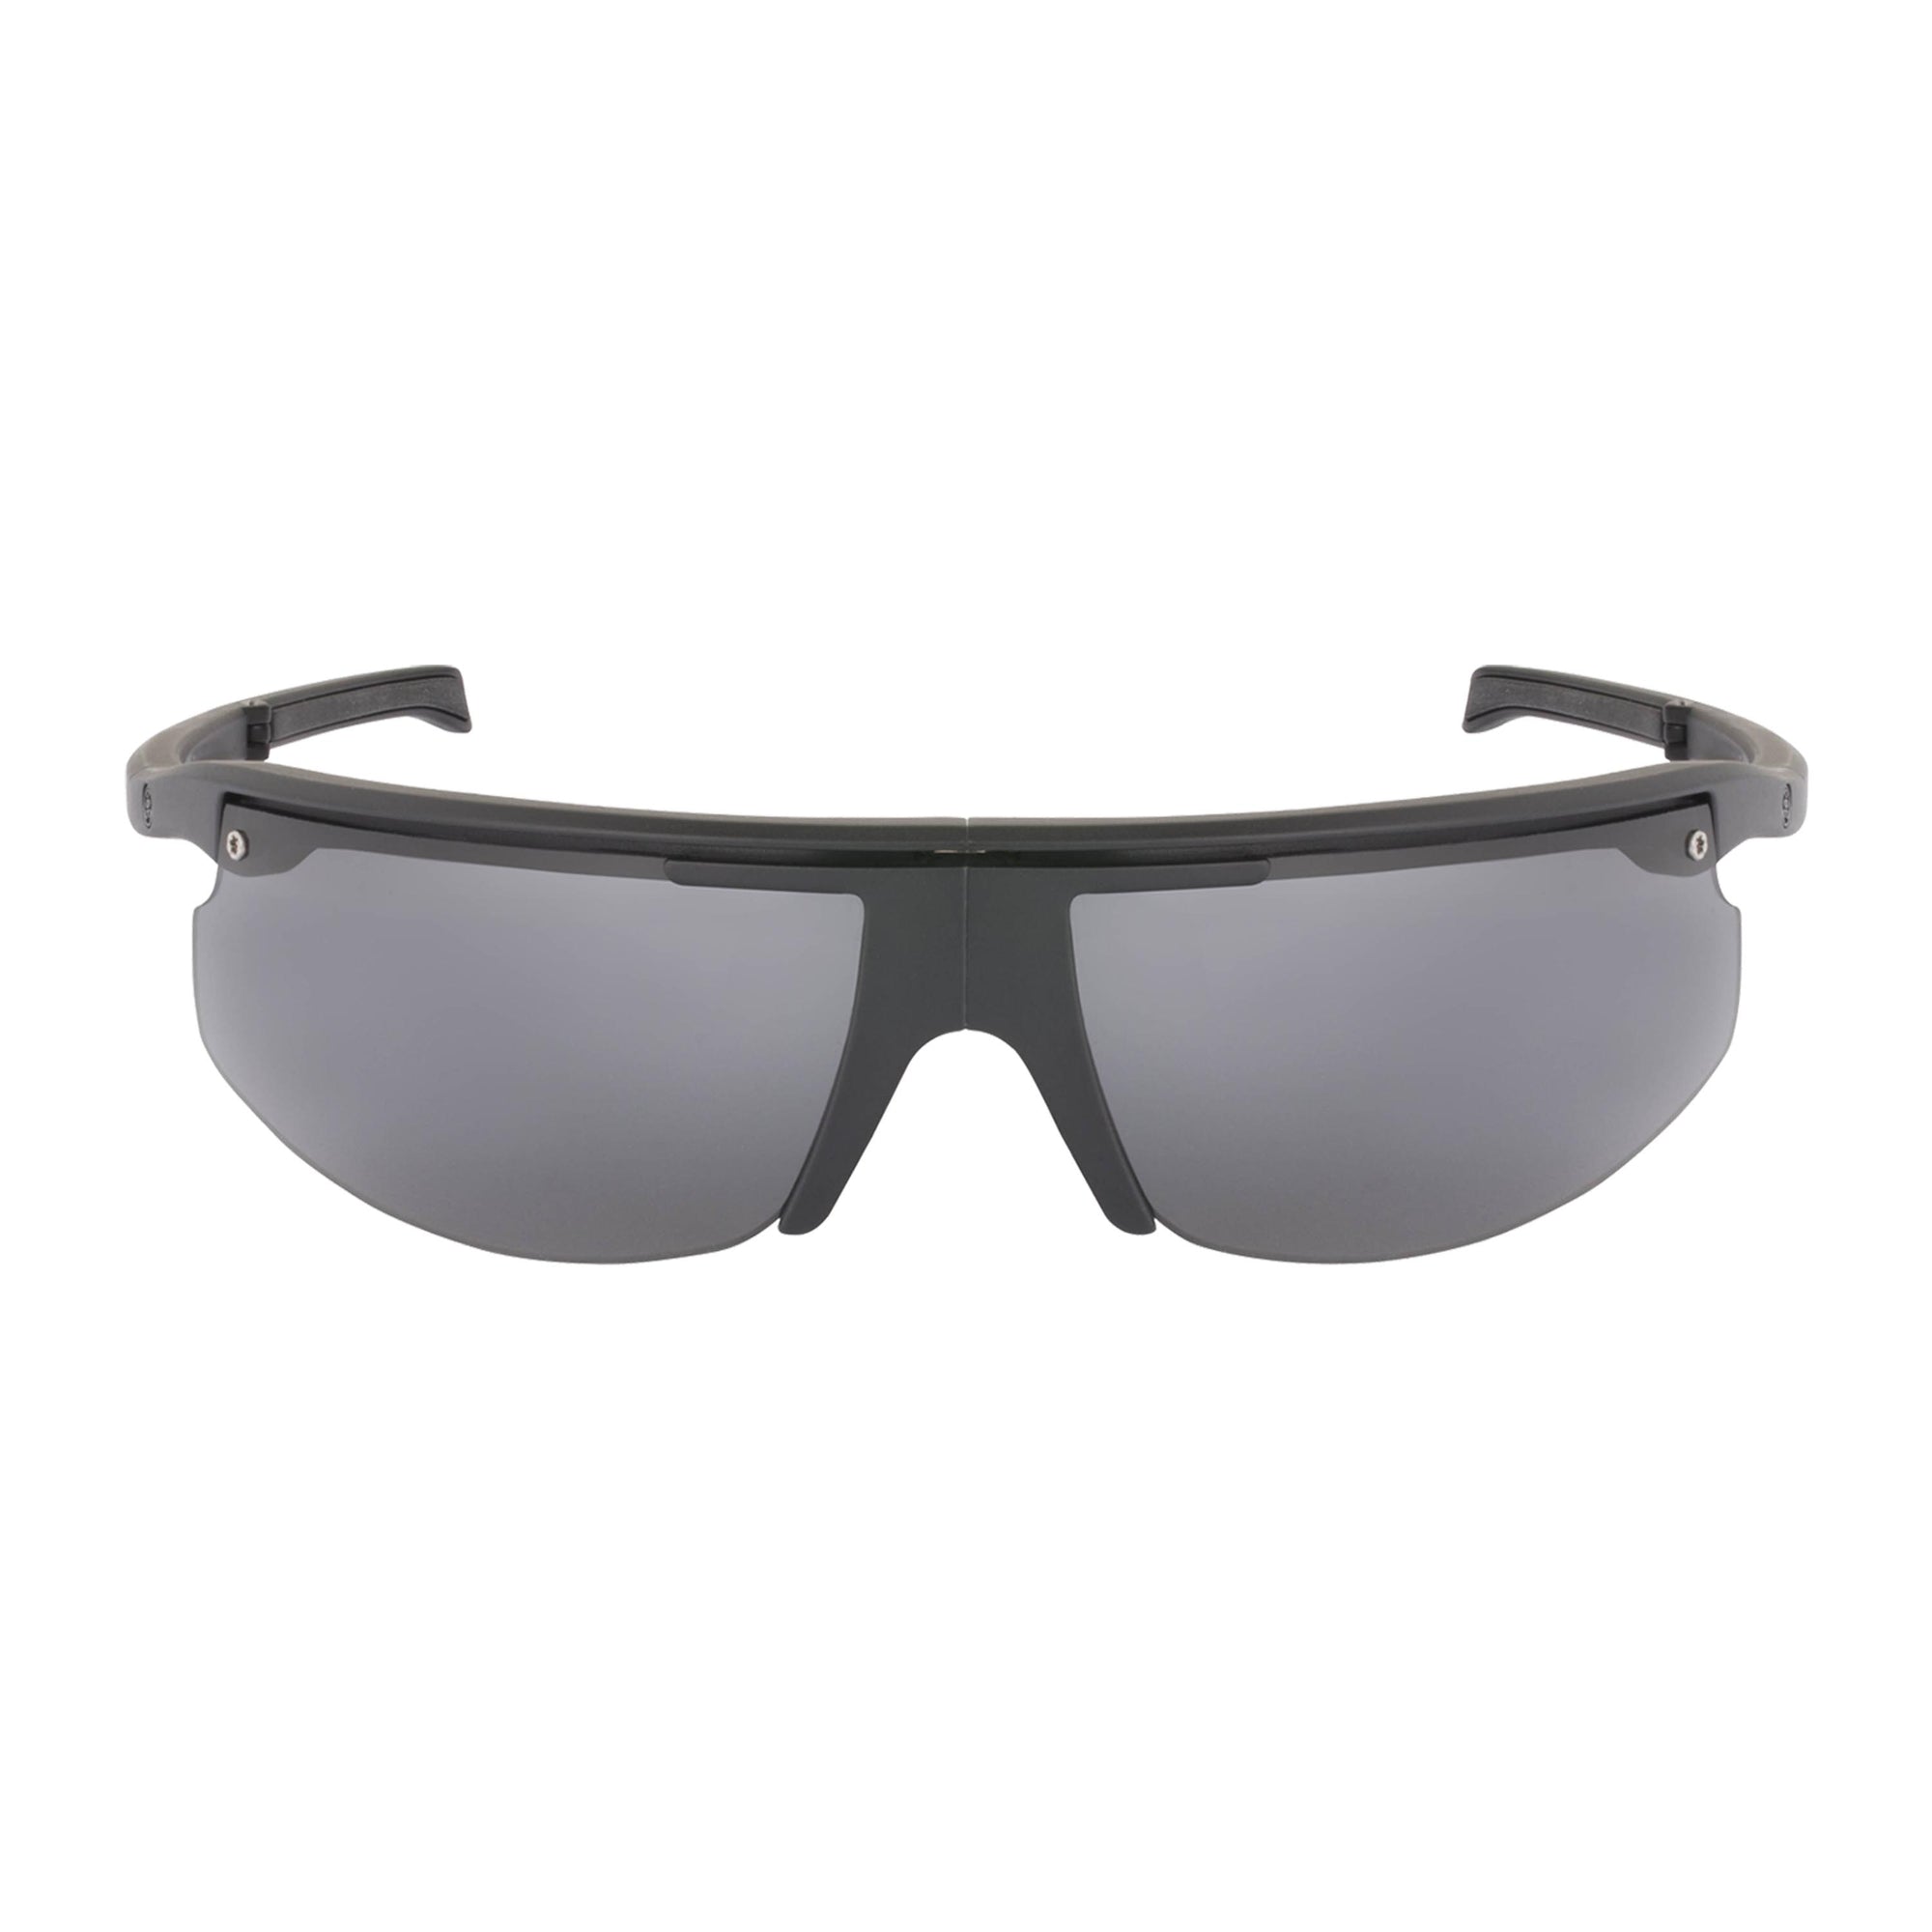 Popticals, Premium Compact Sunglasses, PopStar, 010040-BMGP, Polarized Sunglasses, Matte Black Frame, Gray Lenses, Small, Front View